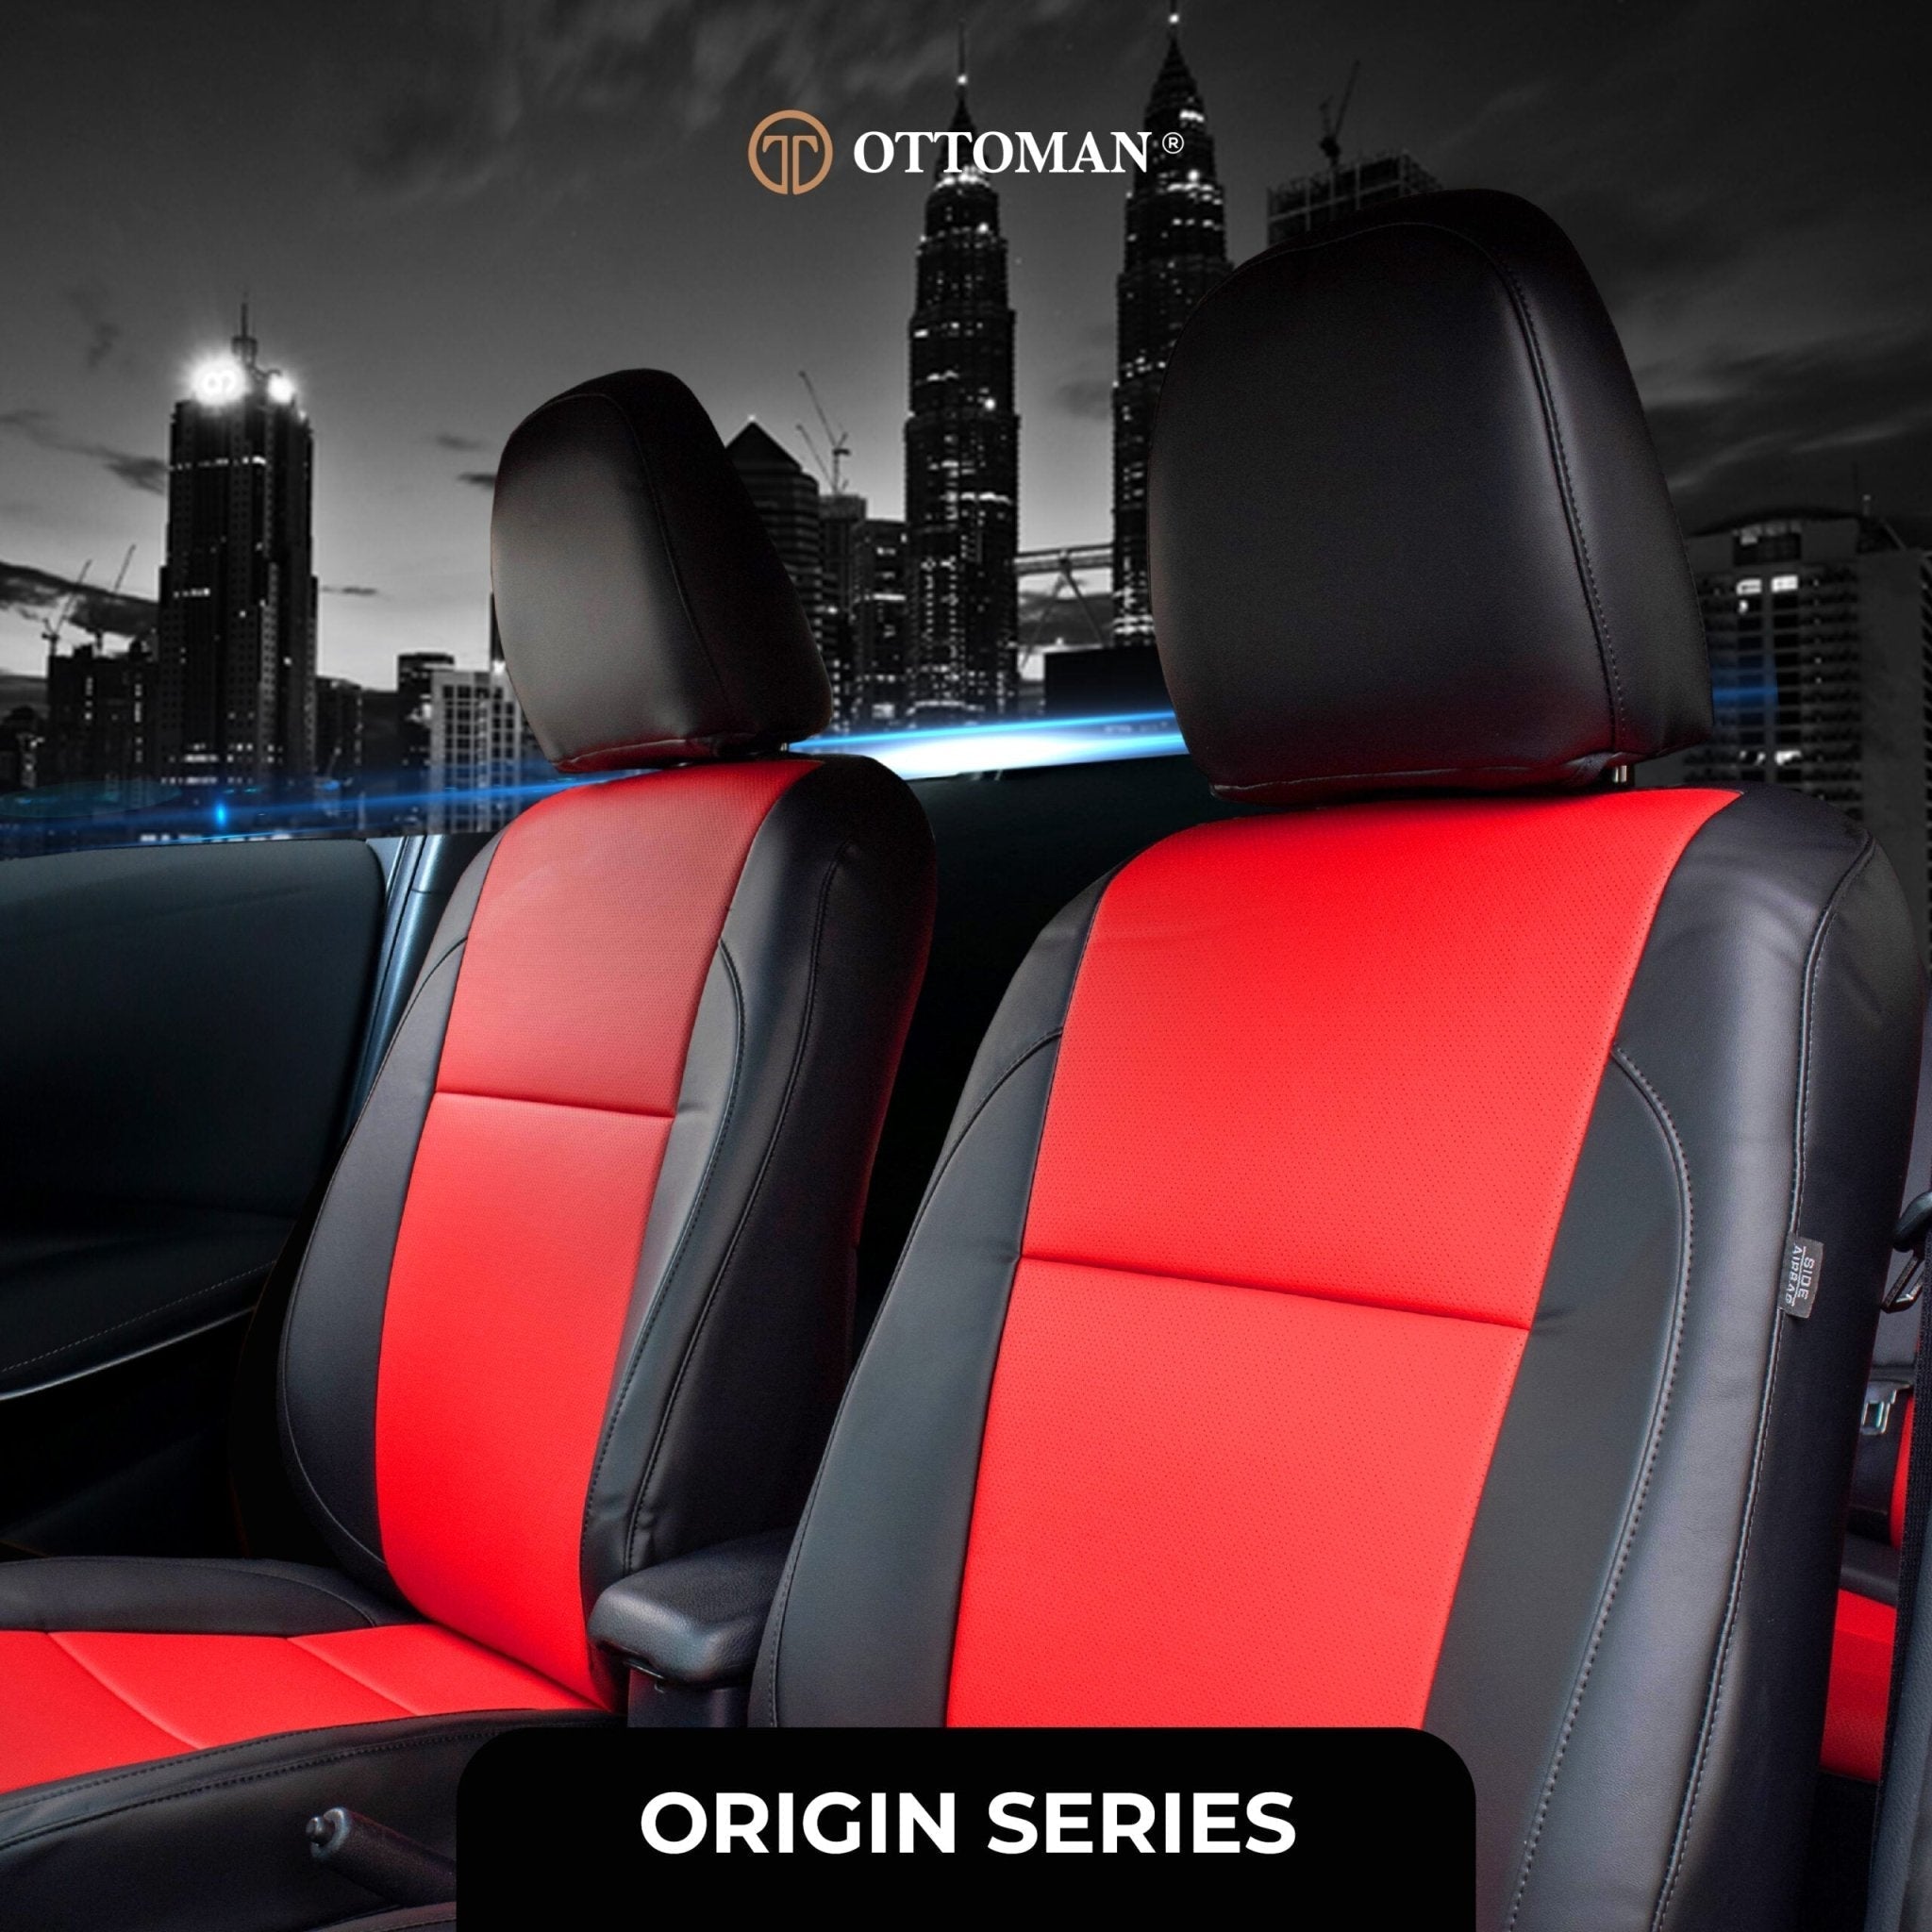 Nissan Juke (2011-Present) Ottoman Seat Cover Seat Cover in Klang Selangor, Penang, Johor Bahru - Ottoman Car Mats